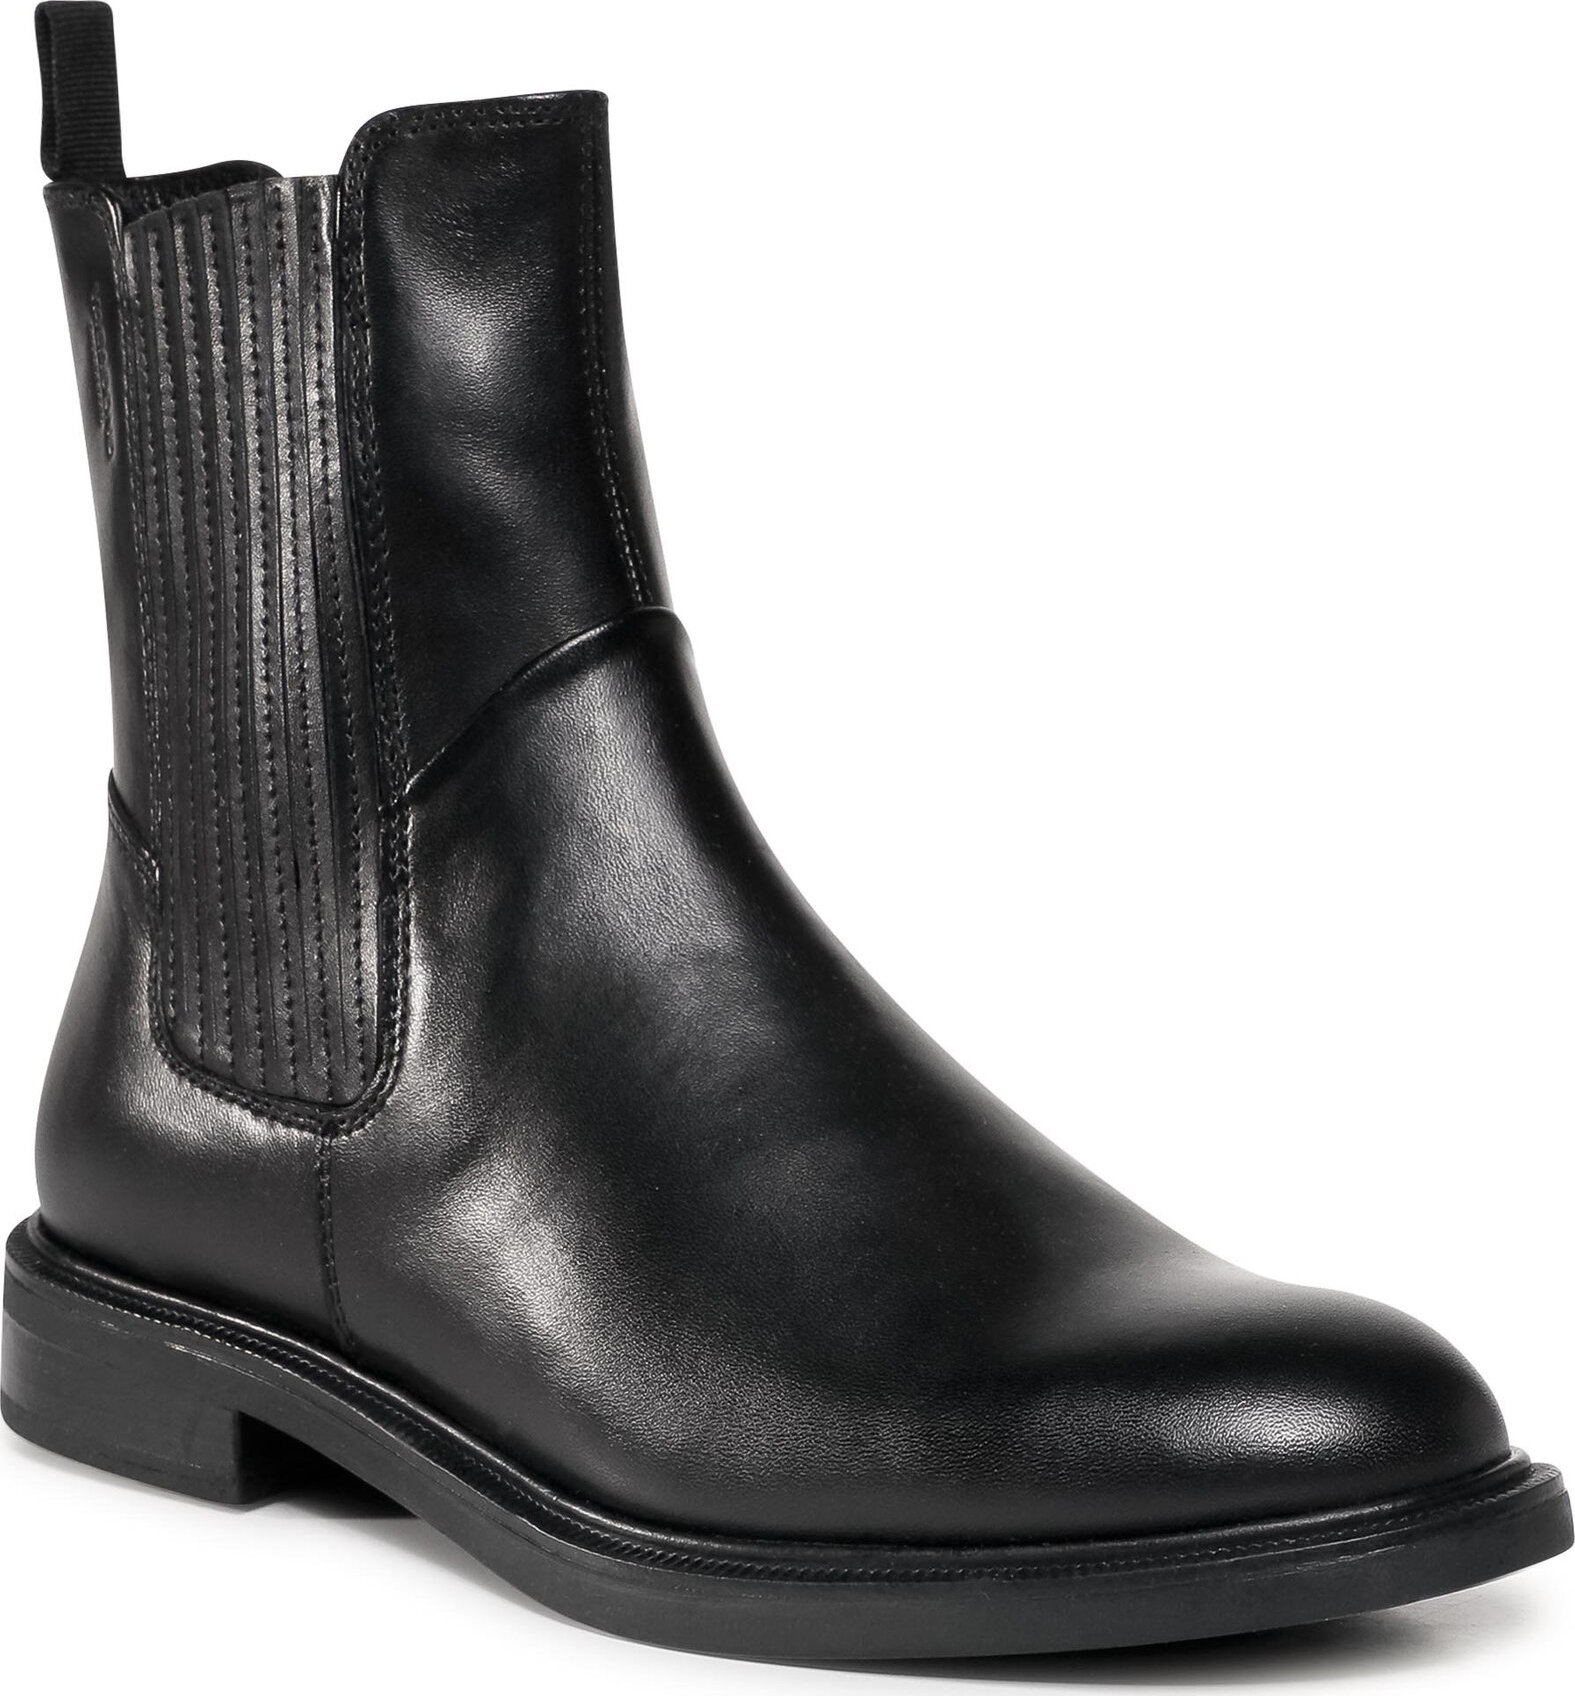 Kotníková obuv s elastickým prvkem Vagabond Amina 5003-101-20 Black